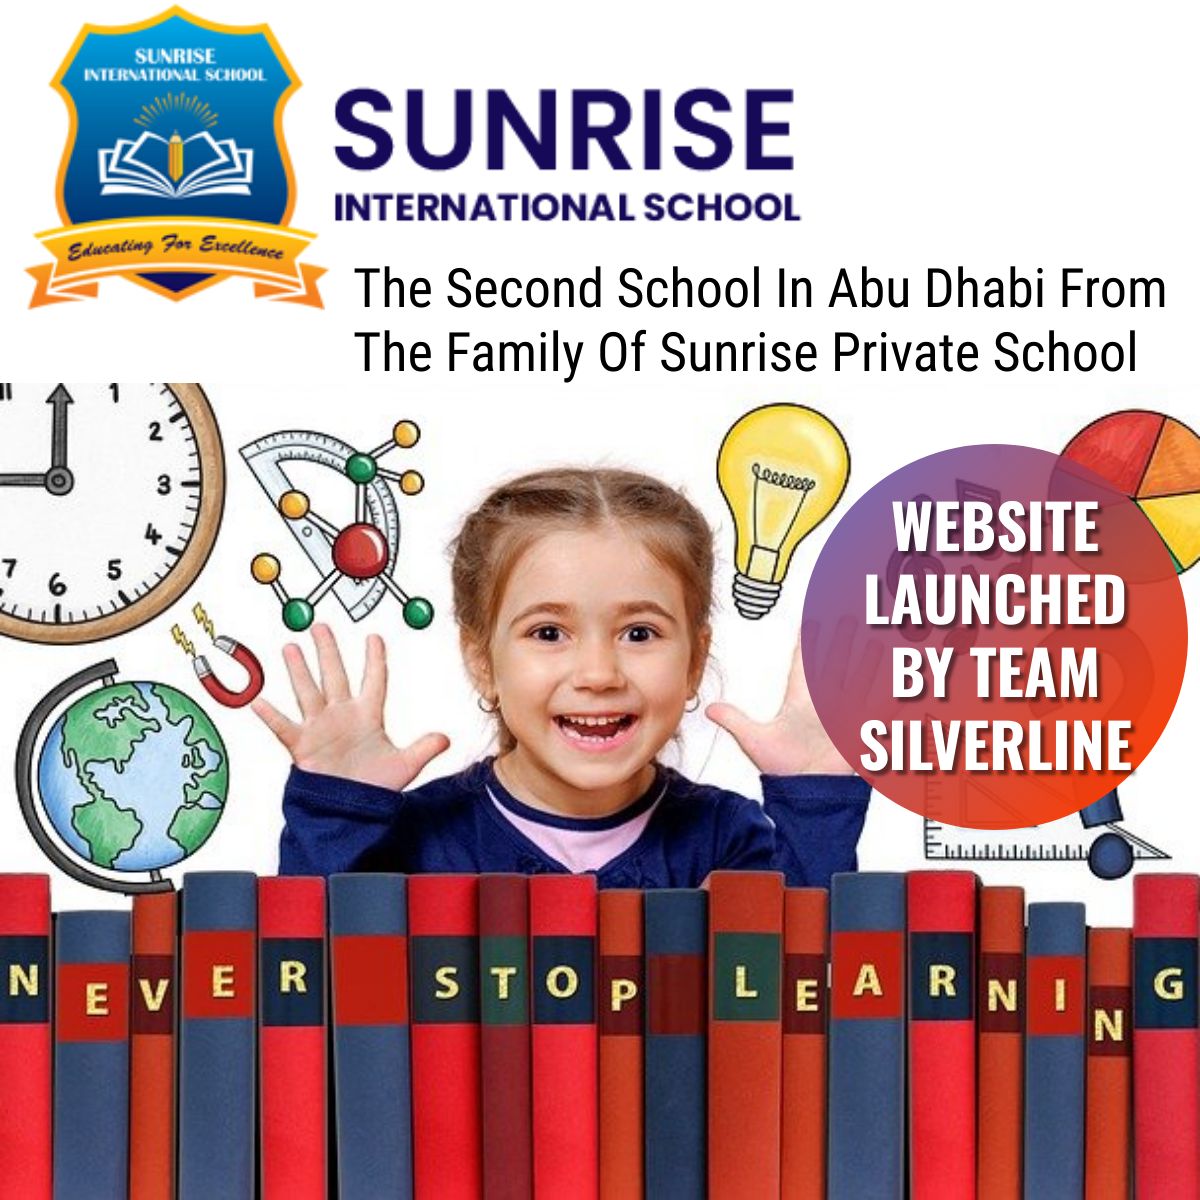 SUNRISE INTERNATIONAL SCHOOL